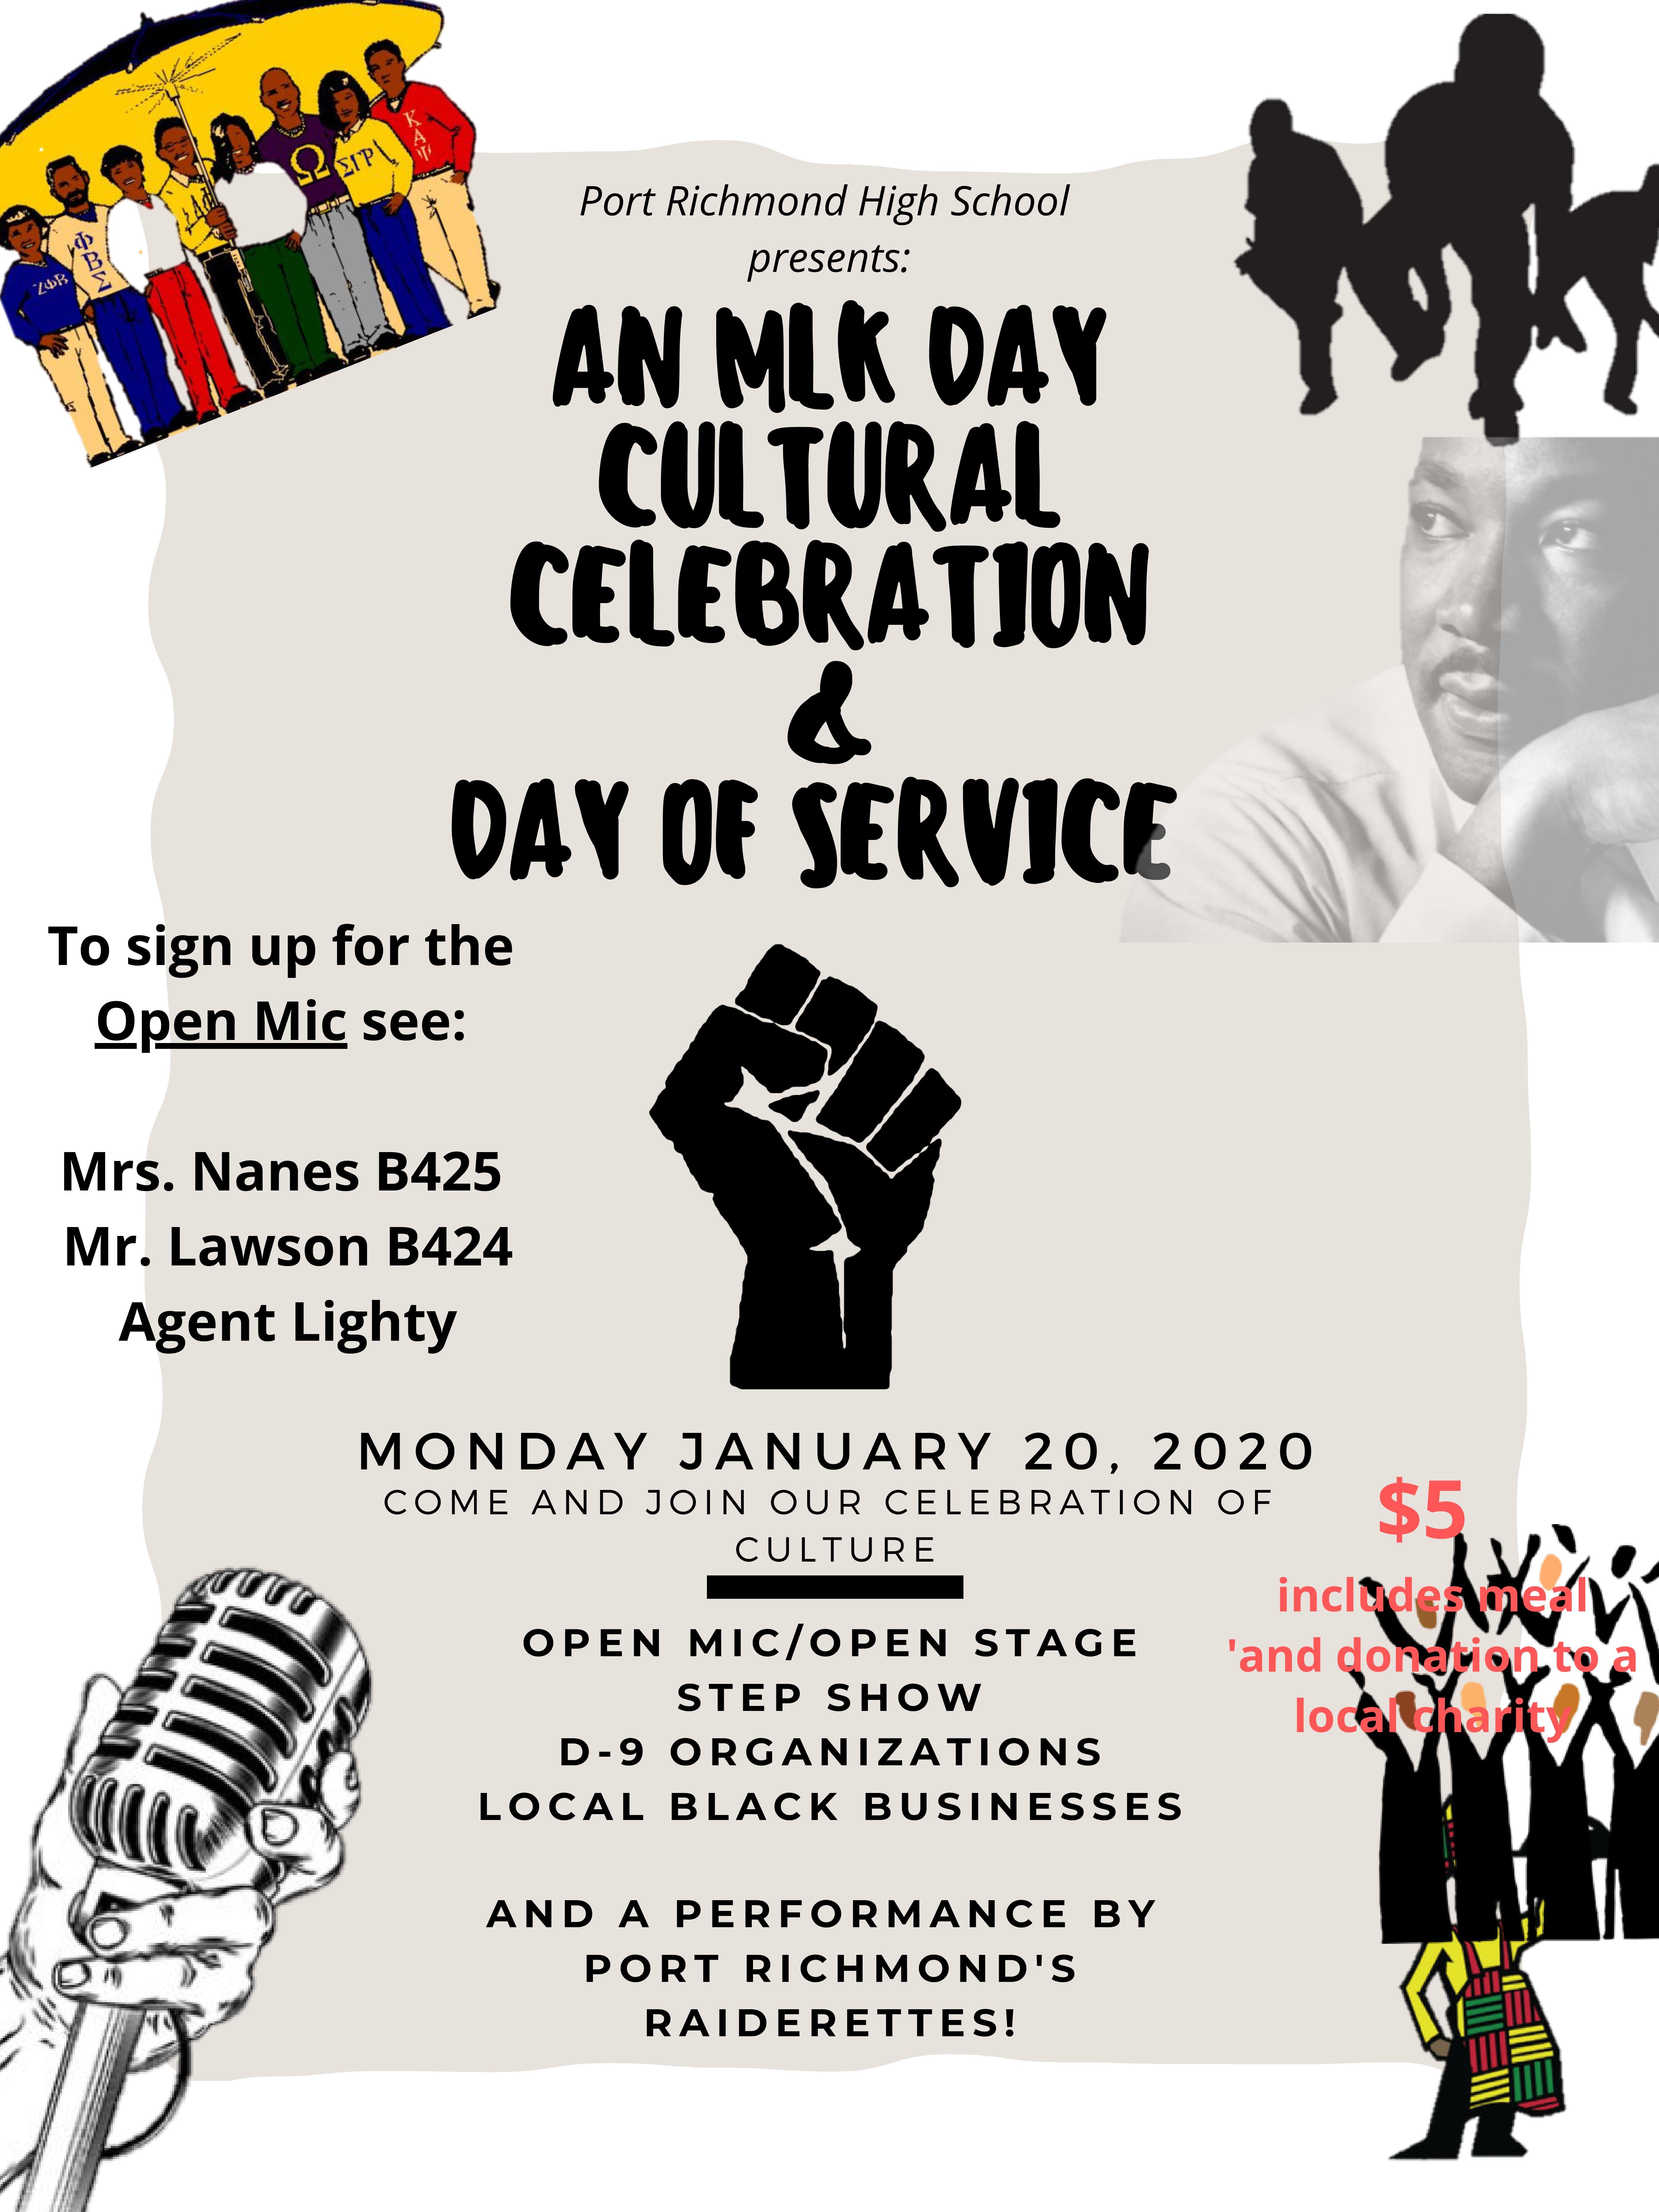 Port Richmond High School's MLK Cultural Celebration & Day of Service